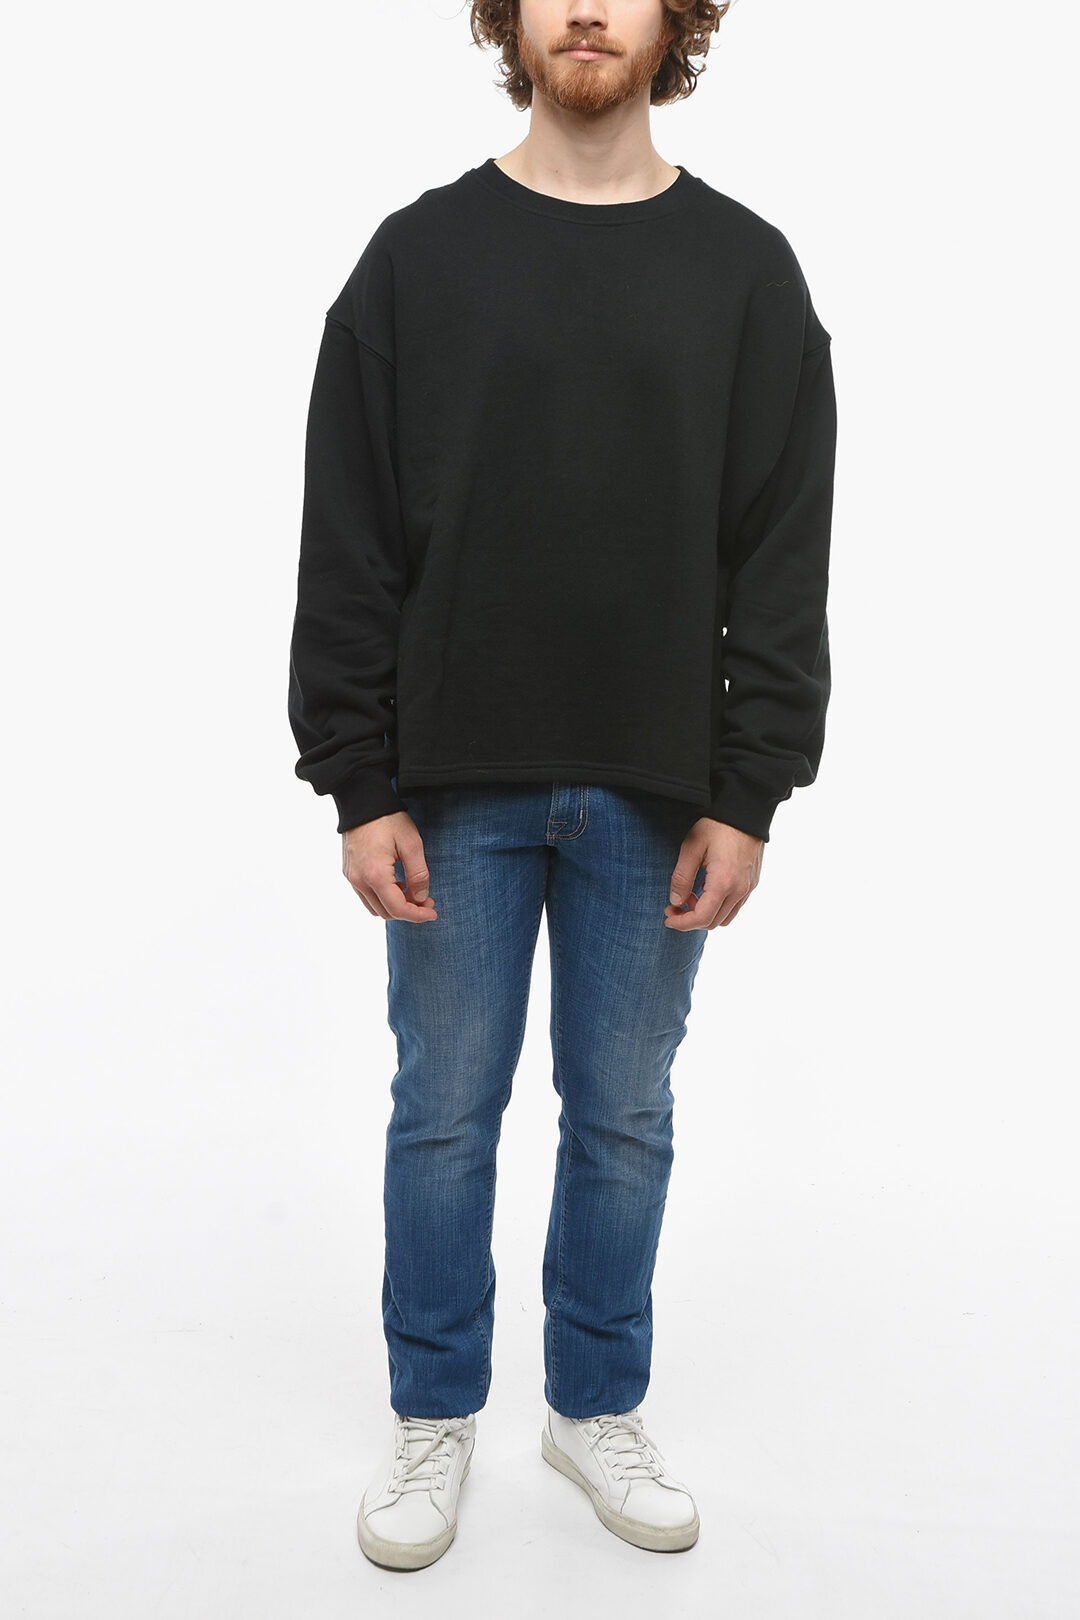 Lownn Asymmetrical Sweatshirt with Side Slits men - Glamood Outlet